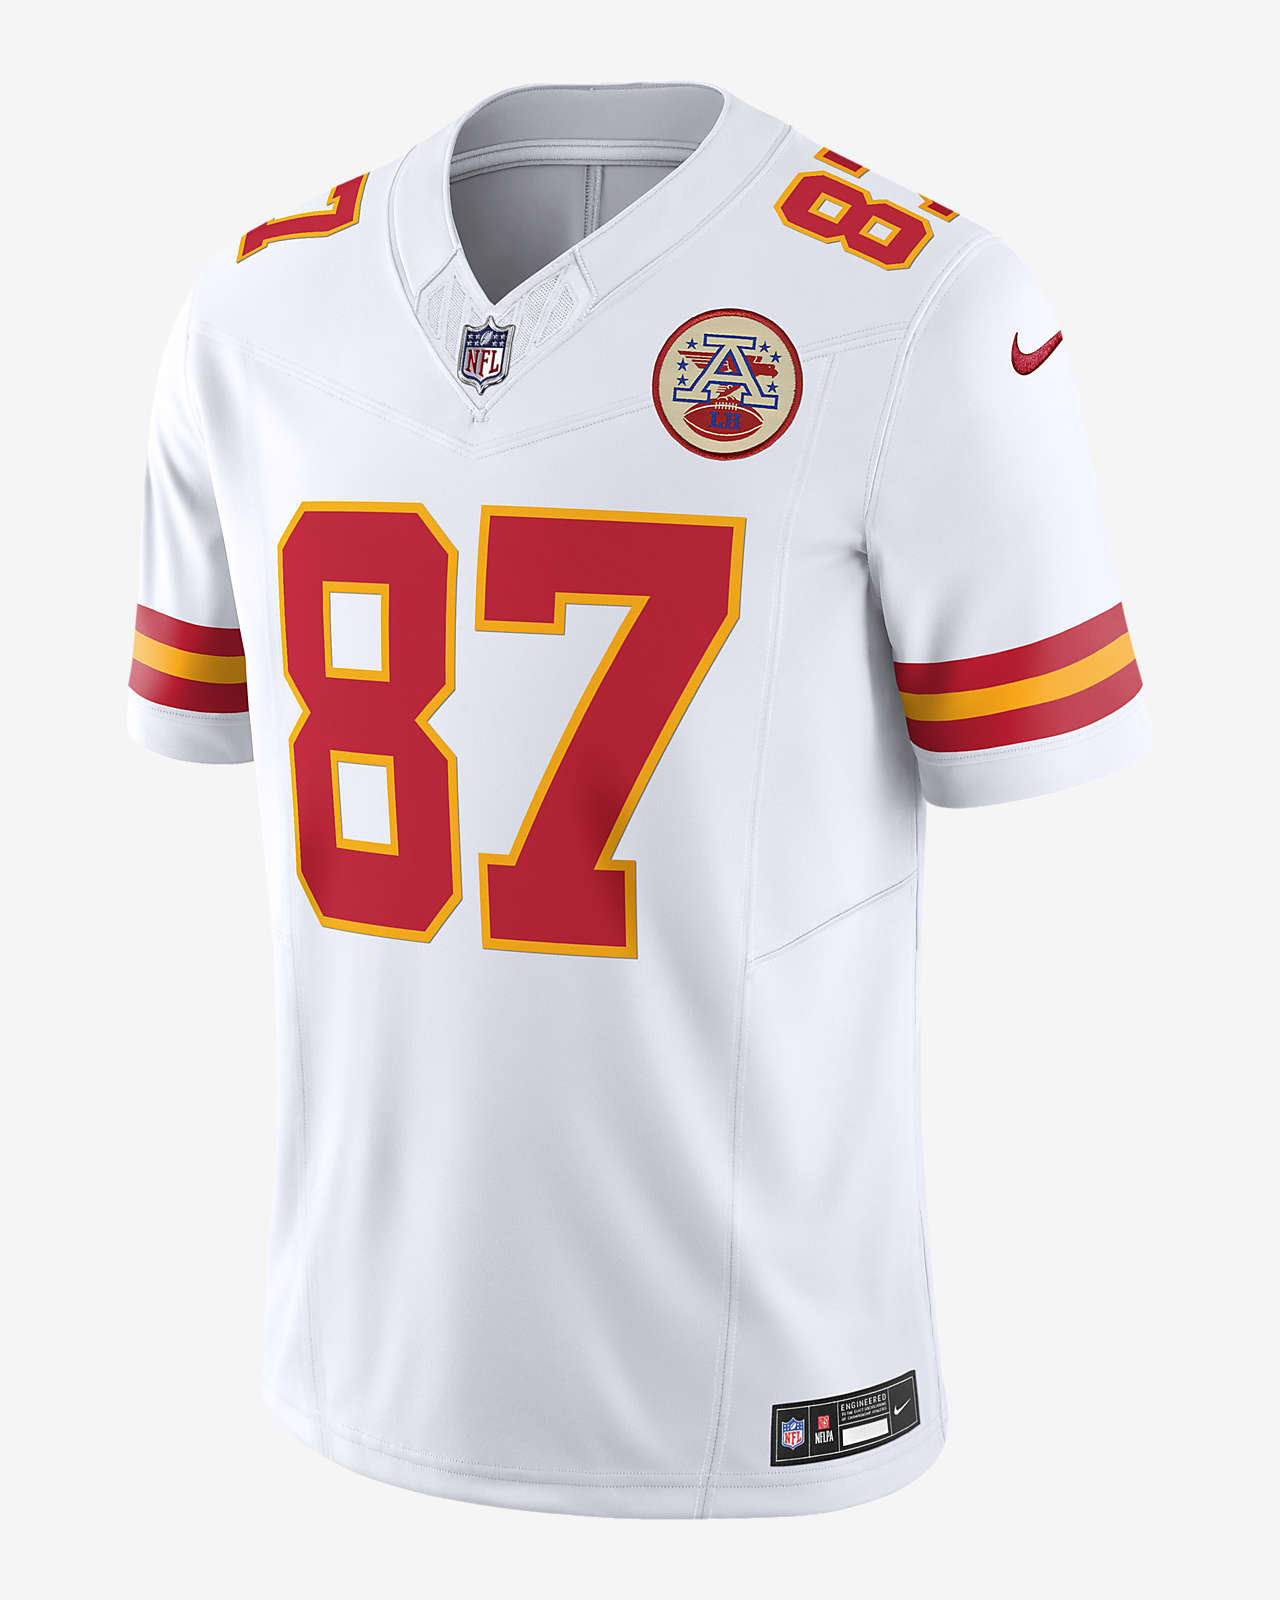 Jersey de fútbol americano Nike Dri-FIT de la NFL Limited para hombre Travis Kelce Kansas City Chiefs